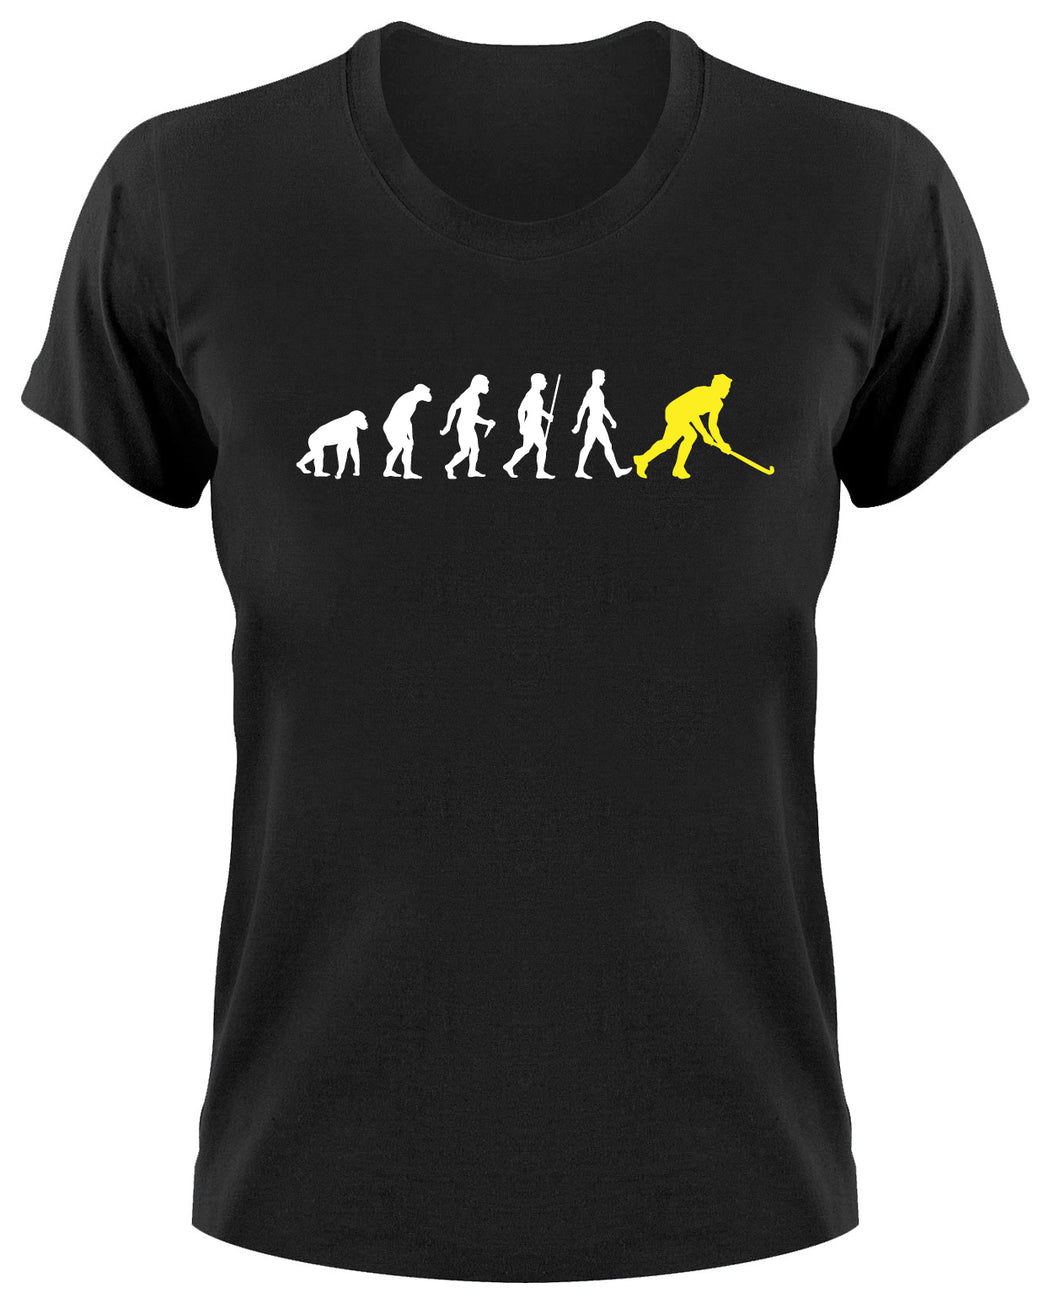 Styletex23 T-Shirt Damen Feldhockey Fun Evolution of Man